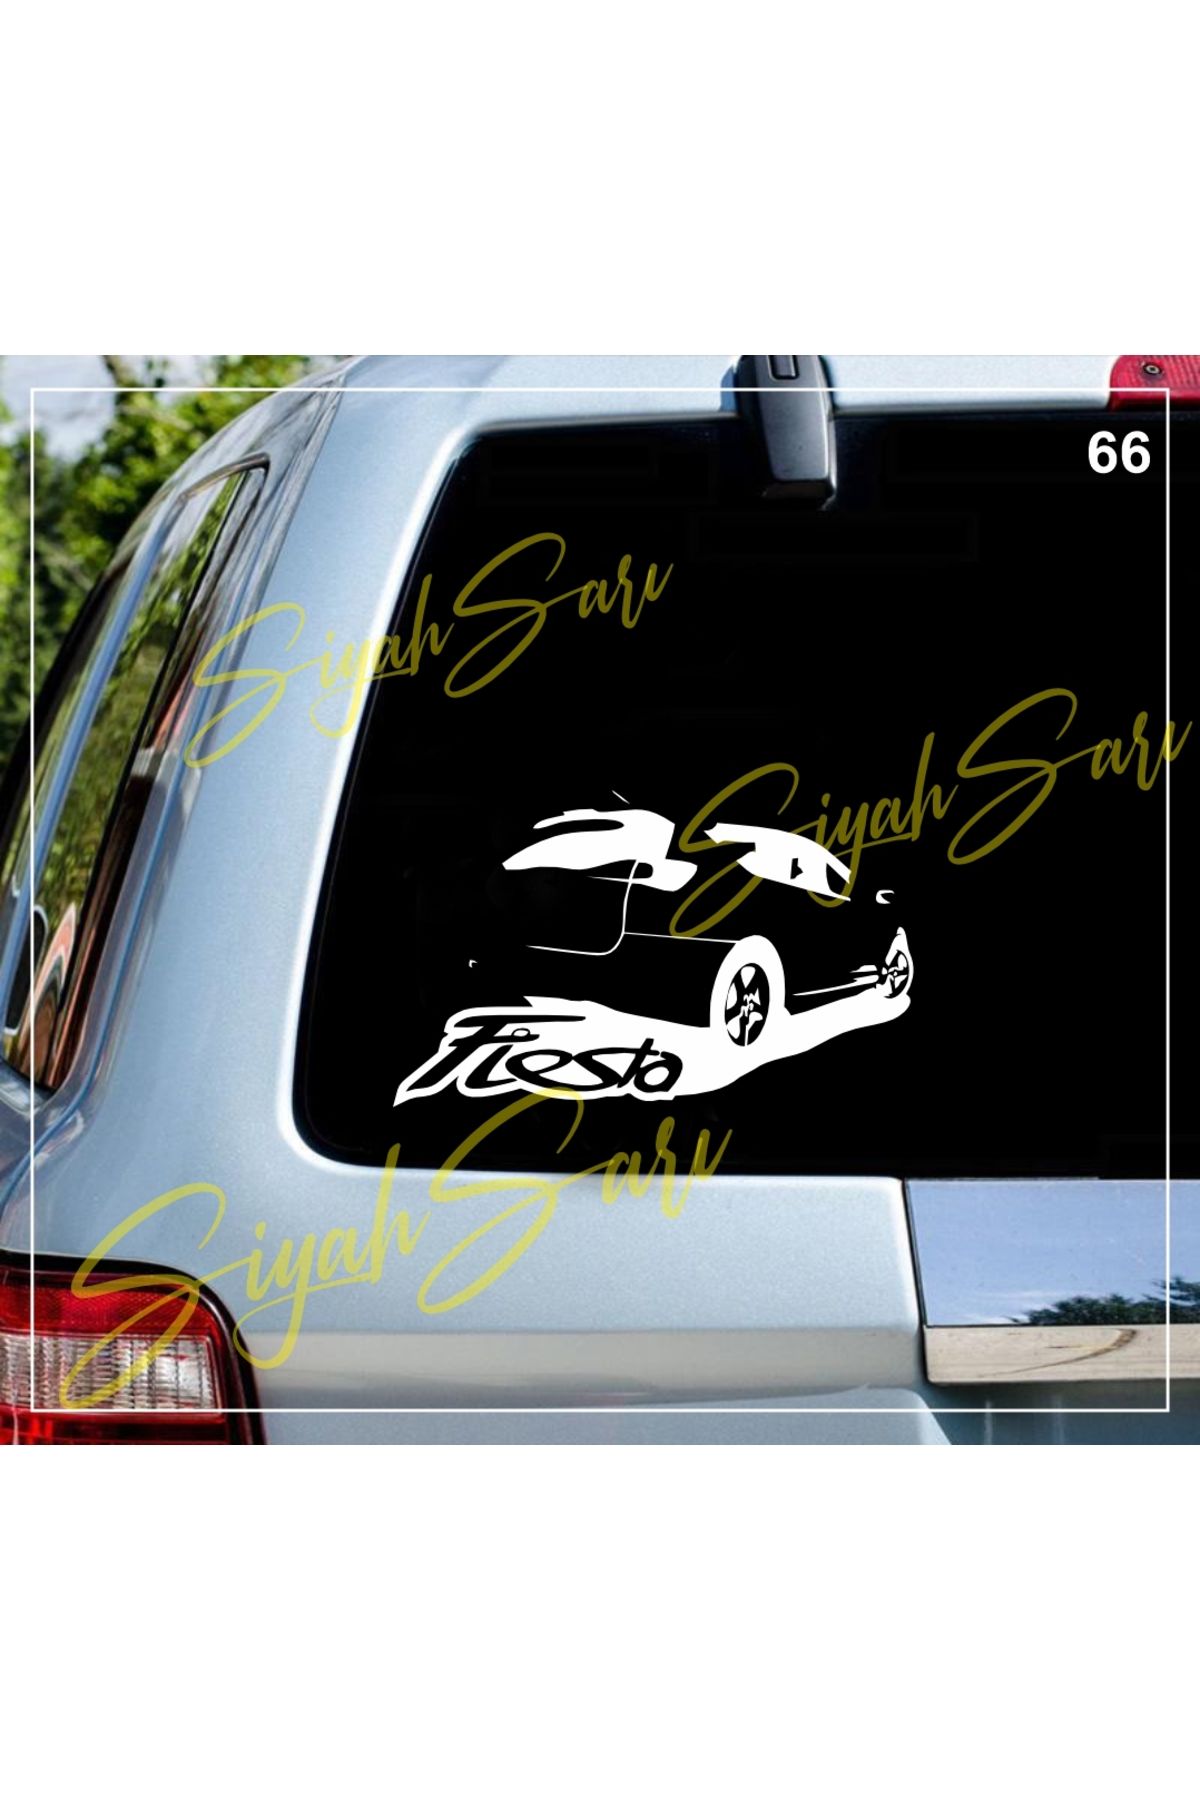 S&S HEDİYELİK EŞYA Ford Fiesta Araba Araç Decal Oto Racing 4x4 Rally Jeep Sticker Etiket Folyo Anahtarlık Hediye